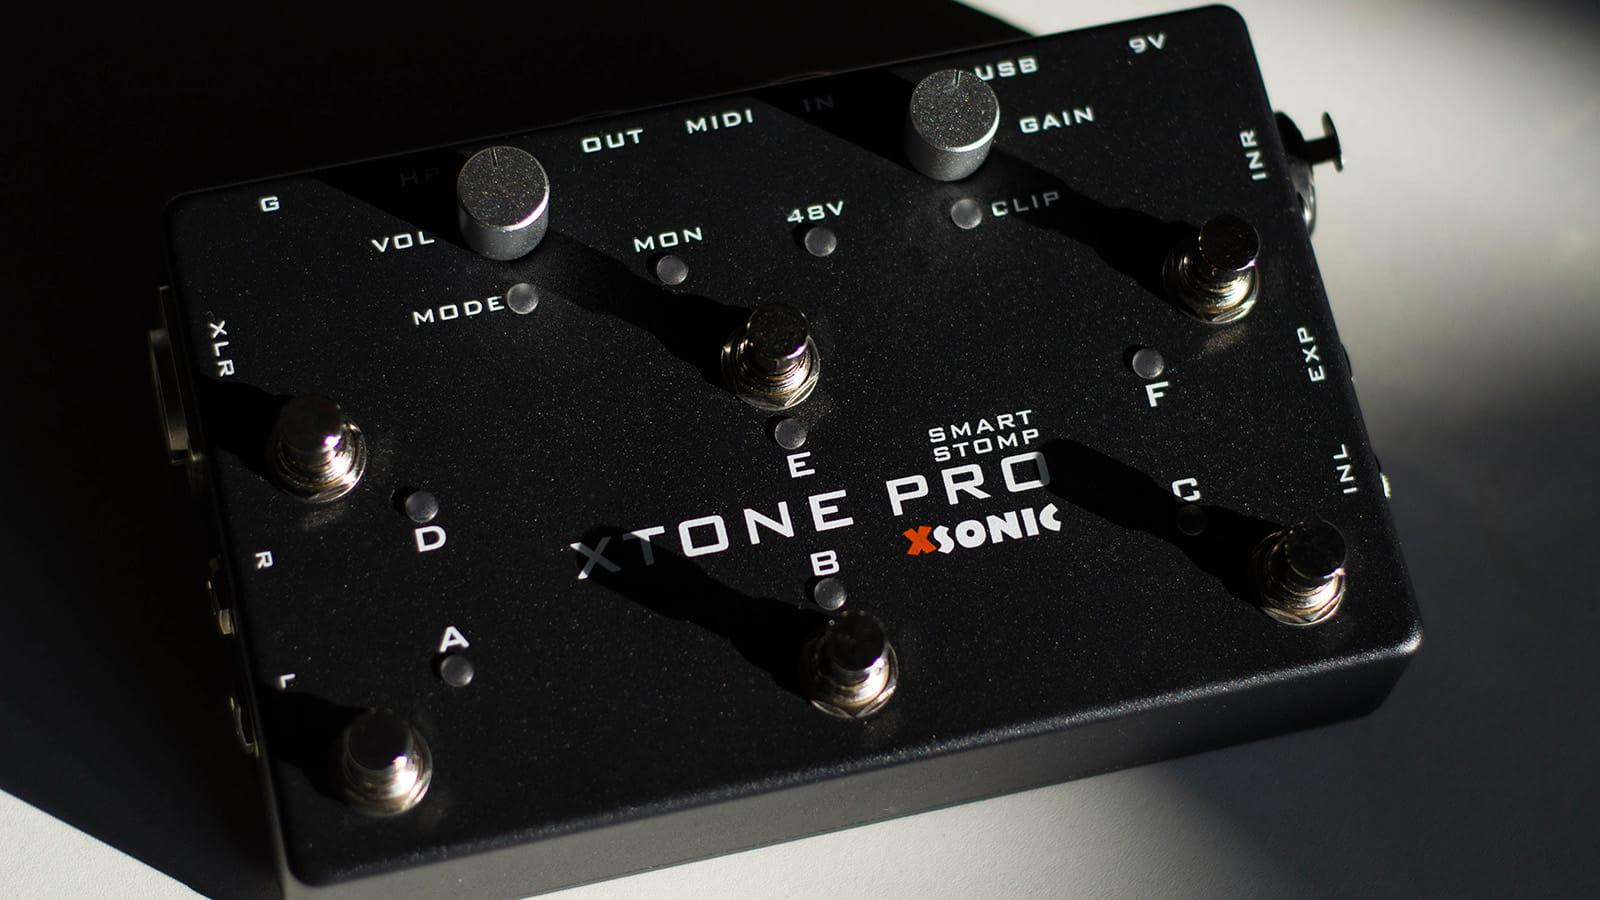 XTONE PRO - XSONIC | Hookup, Inc.